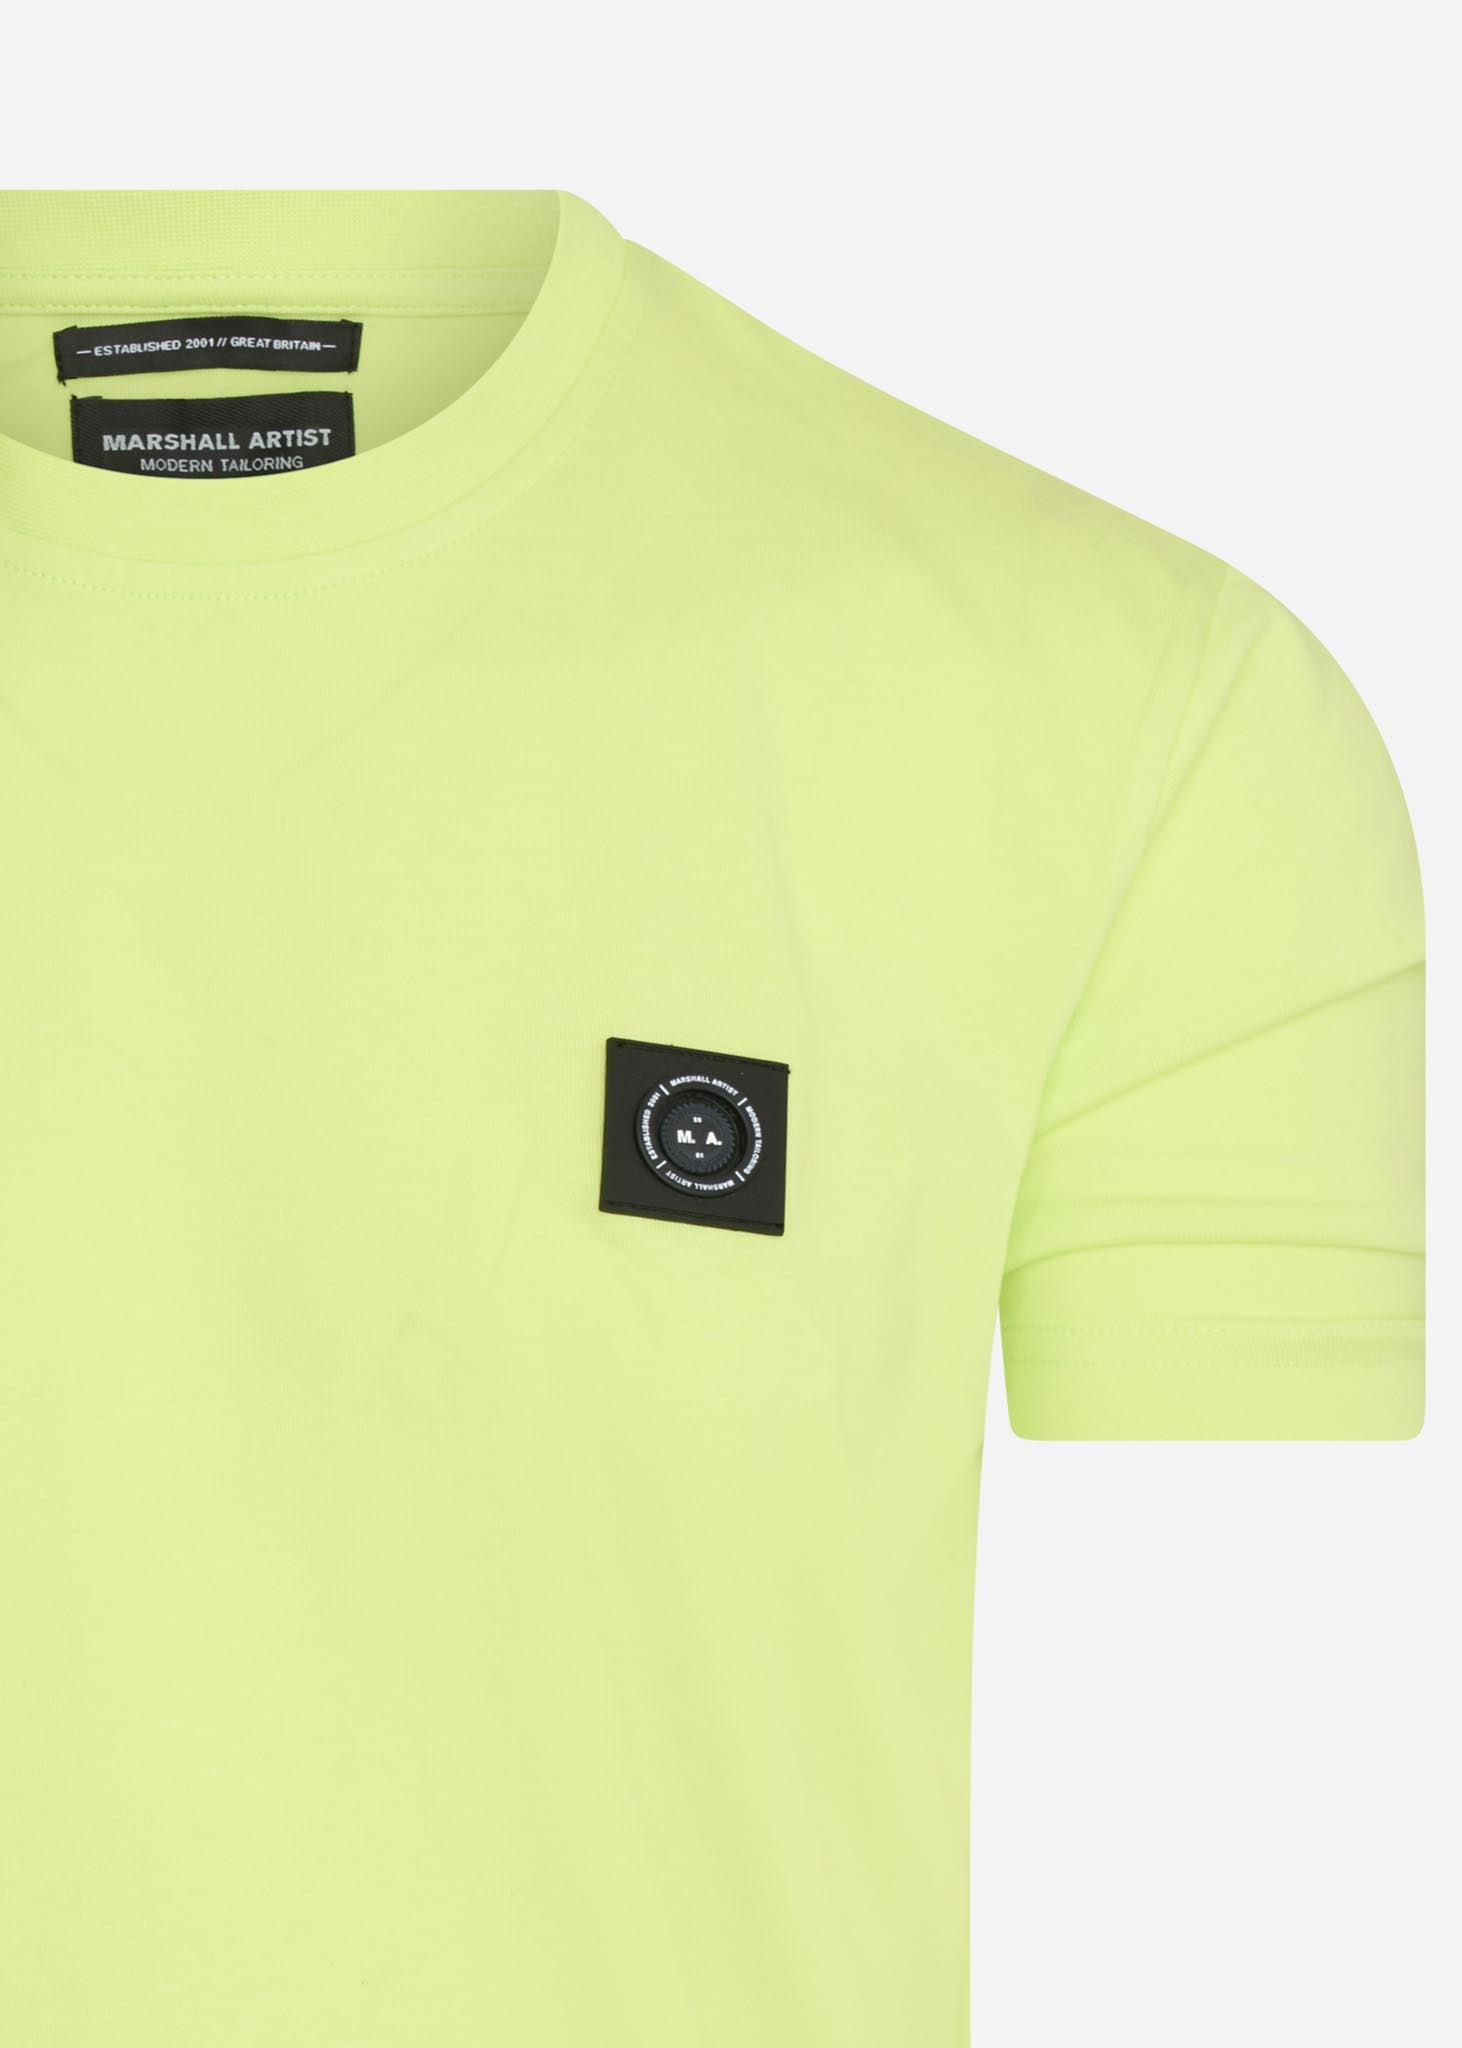 Marshall Artist T-shirts  Siren t-shirt - faded lime 